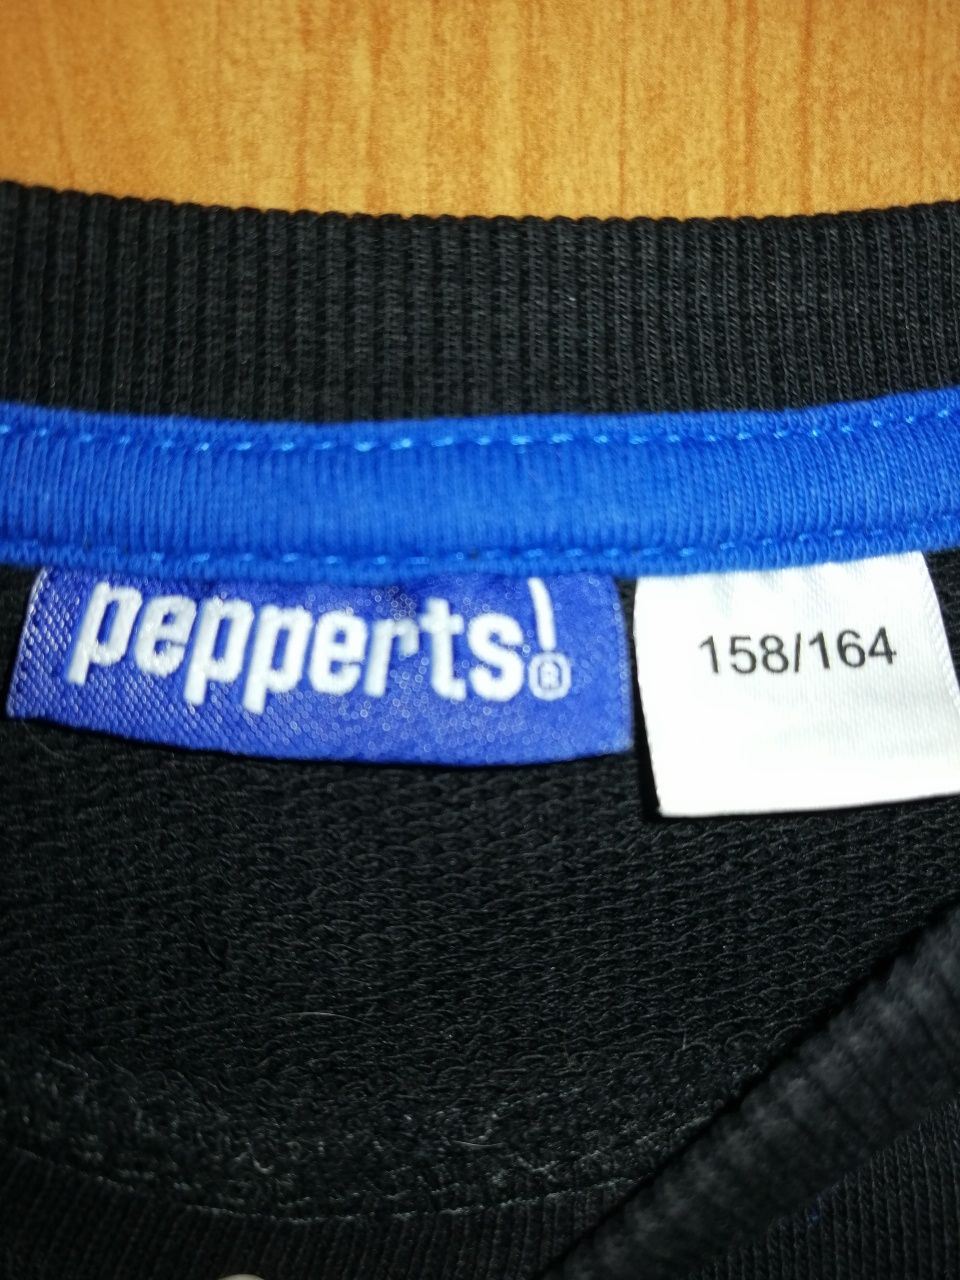 Bluza chłopięca Pepperts r. 158/164